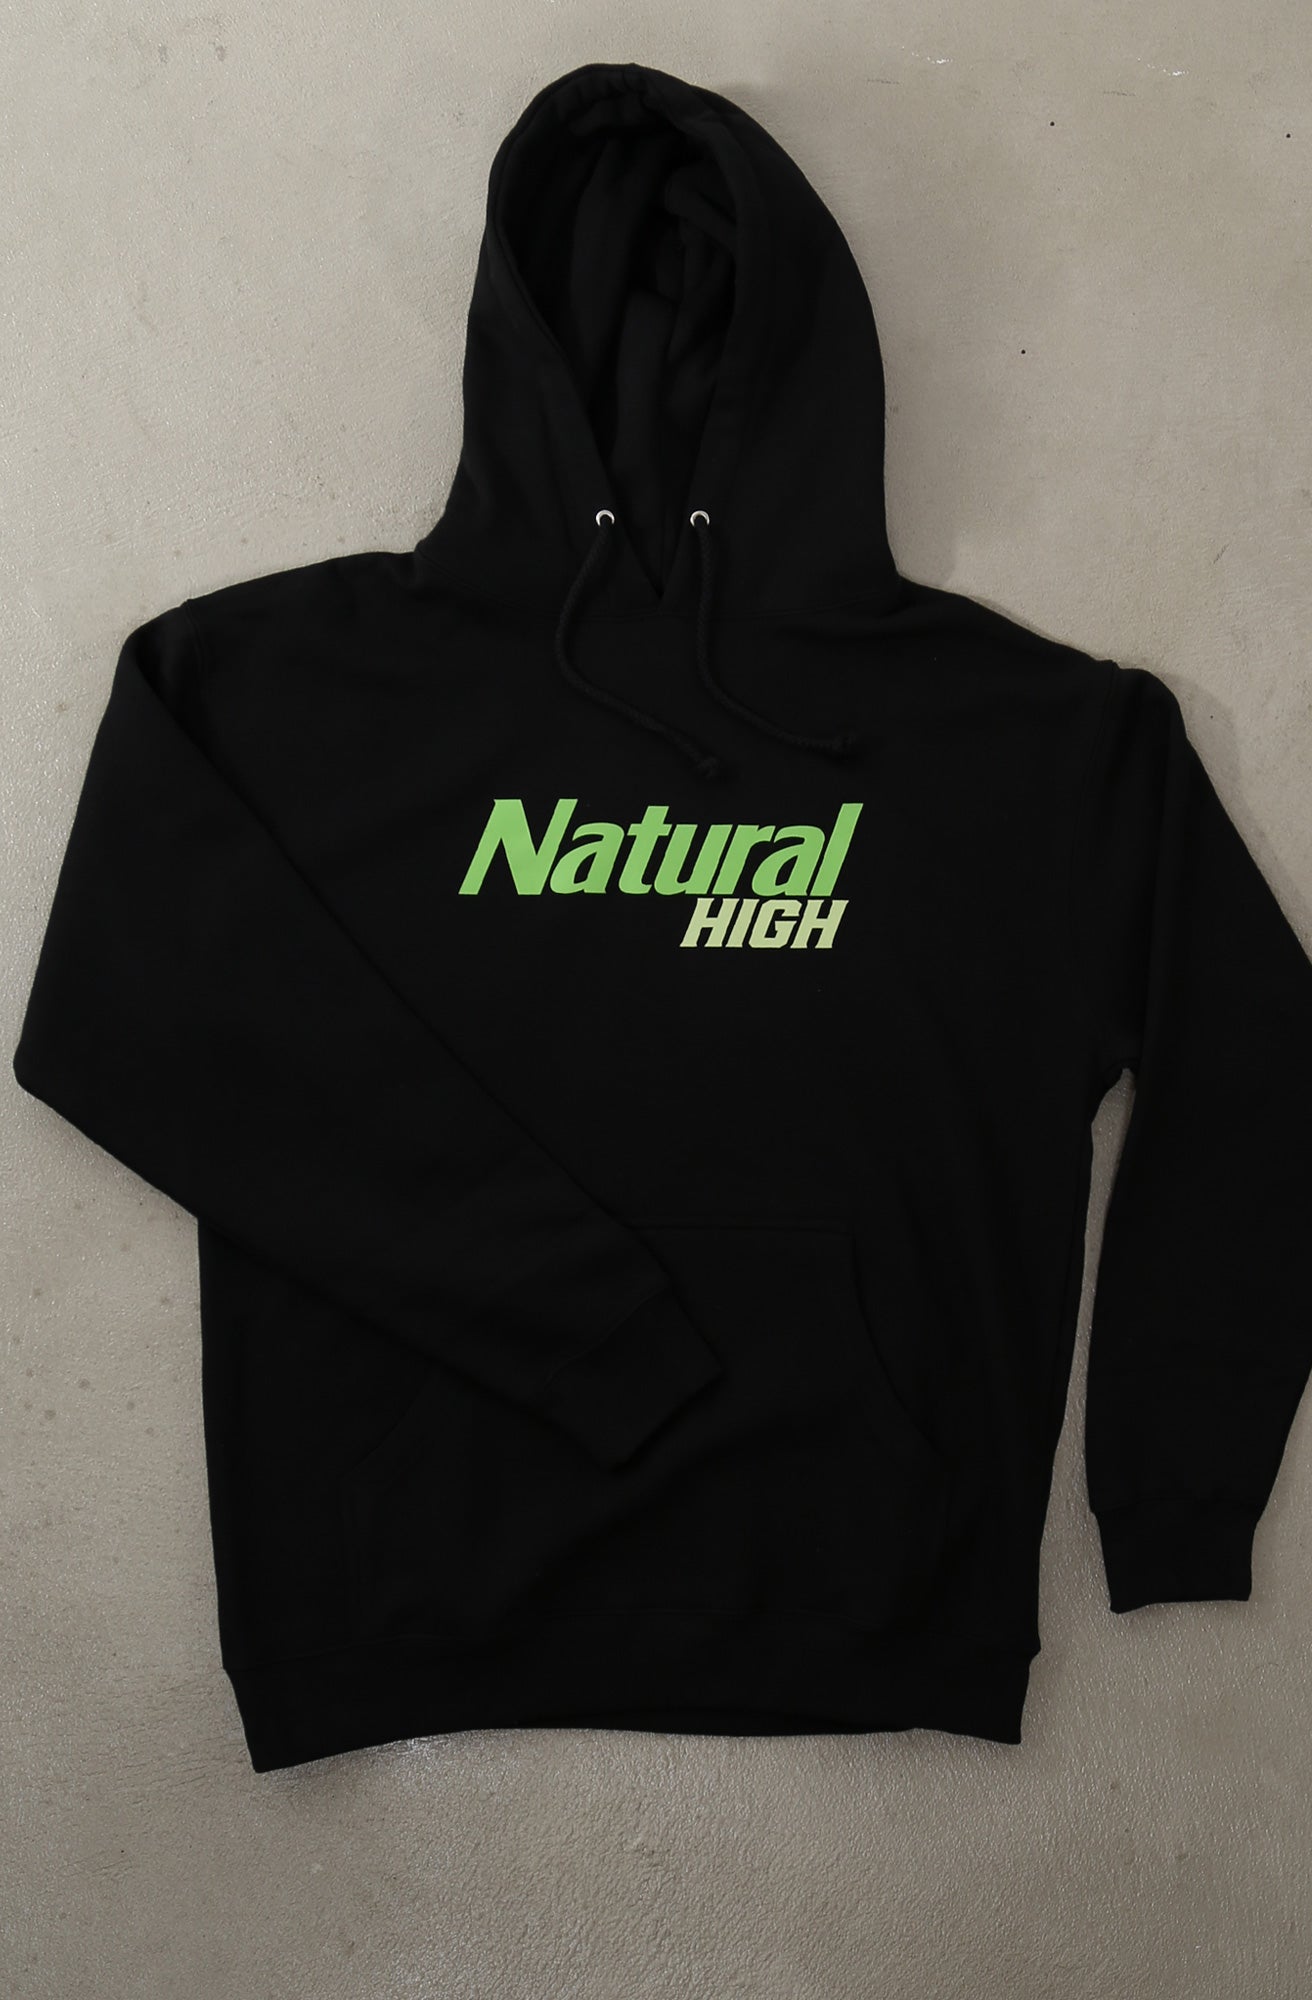 Natural High (Men's Black/Green Hoody)